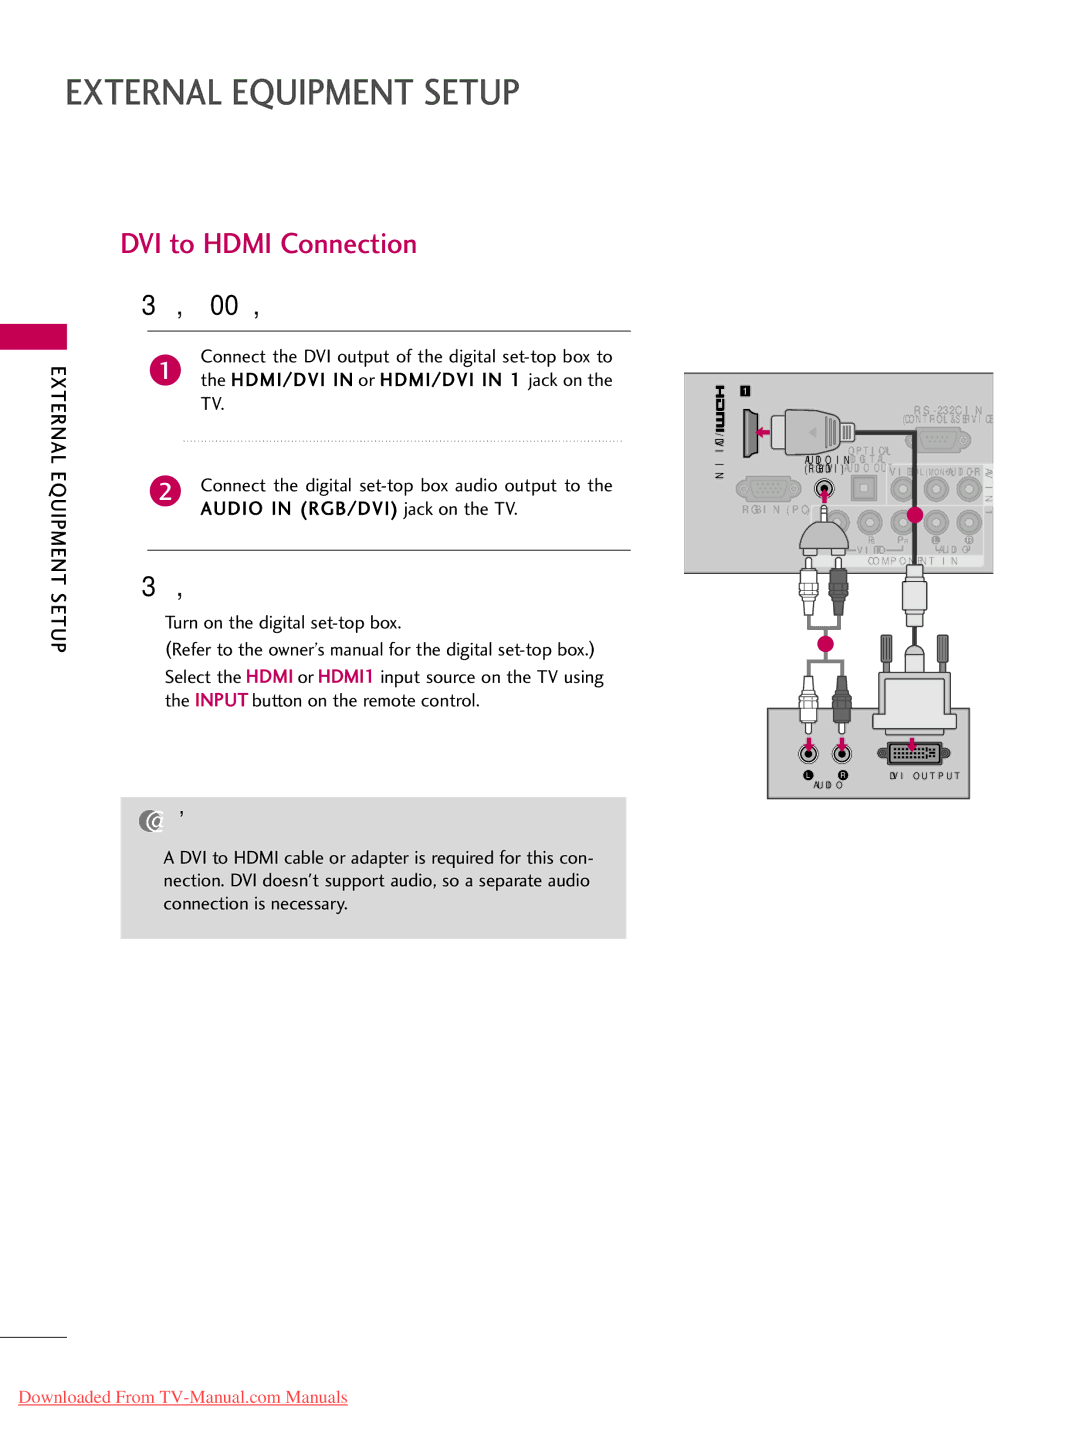 LG Electronics 37LD450, 32LD350, 47LD450, 47LD520, 47LD420, 32LD320, 26LD350 External Equipment Setup, DVI to Hdmi Connection 